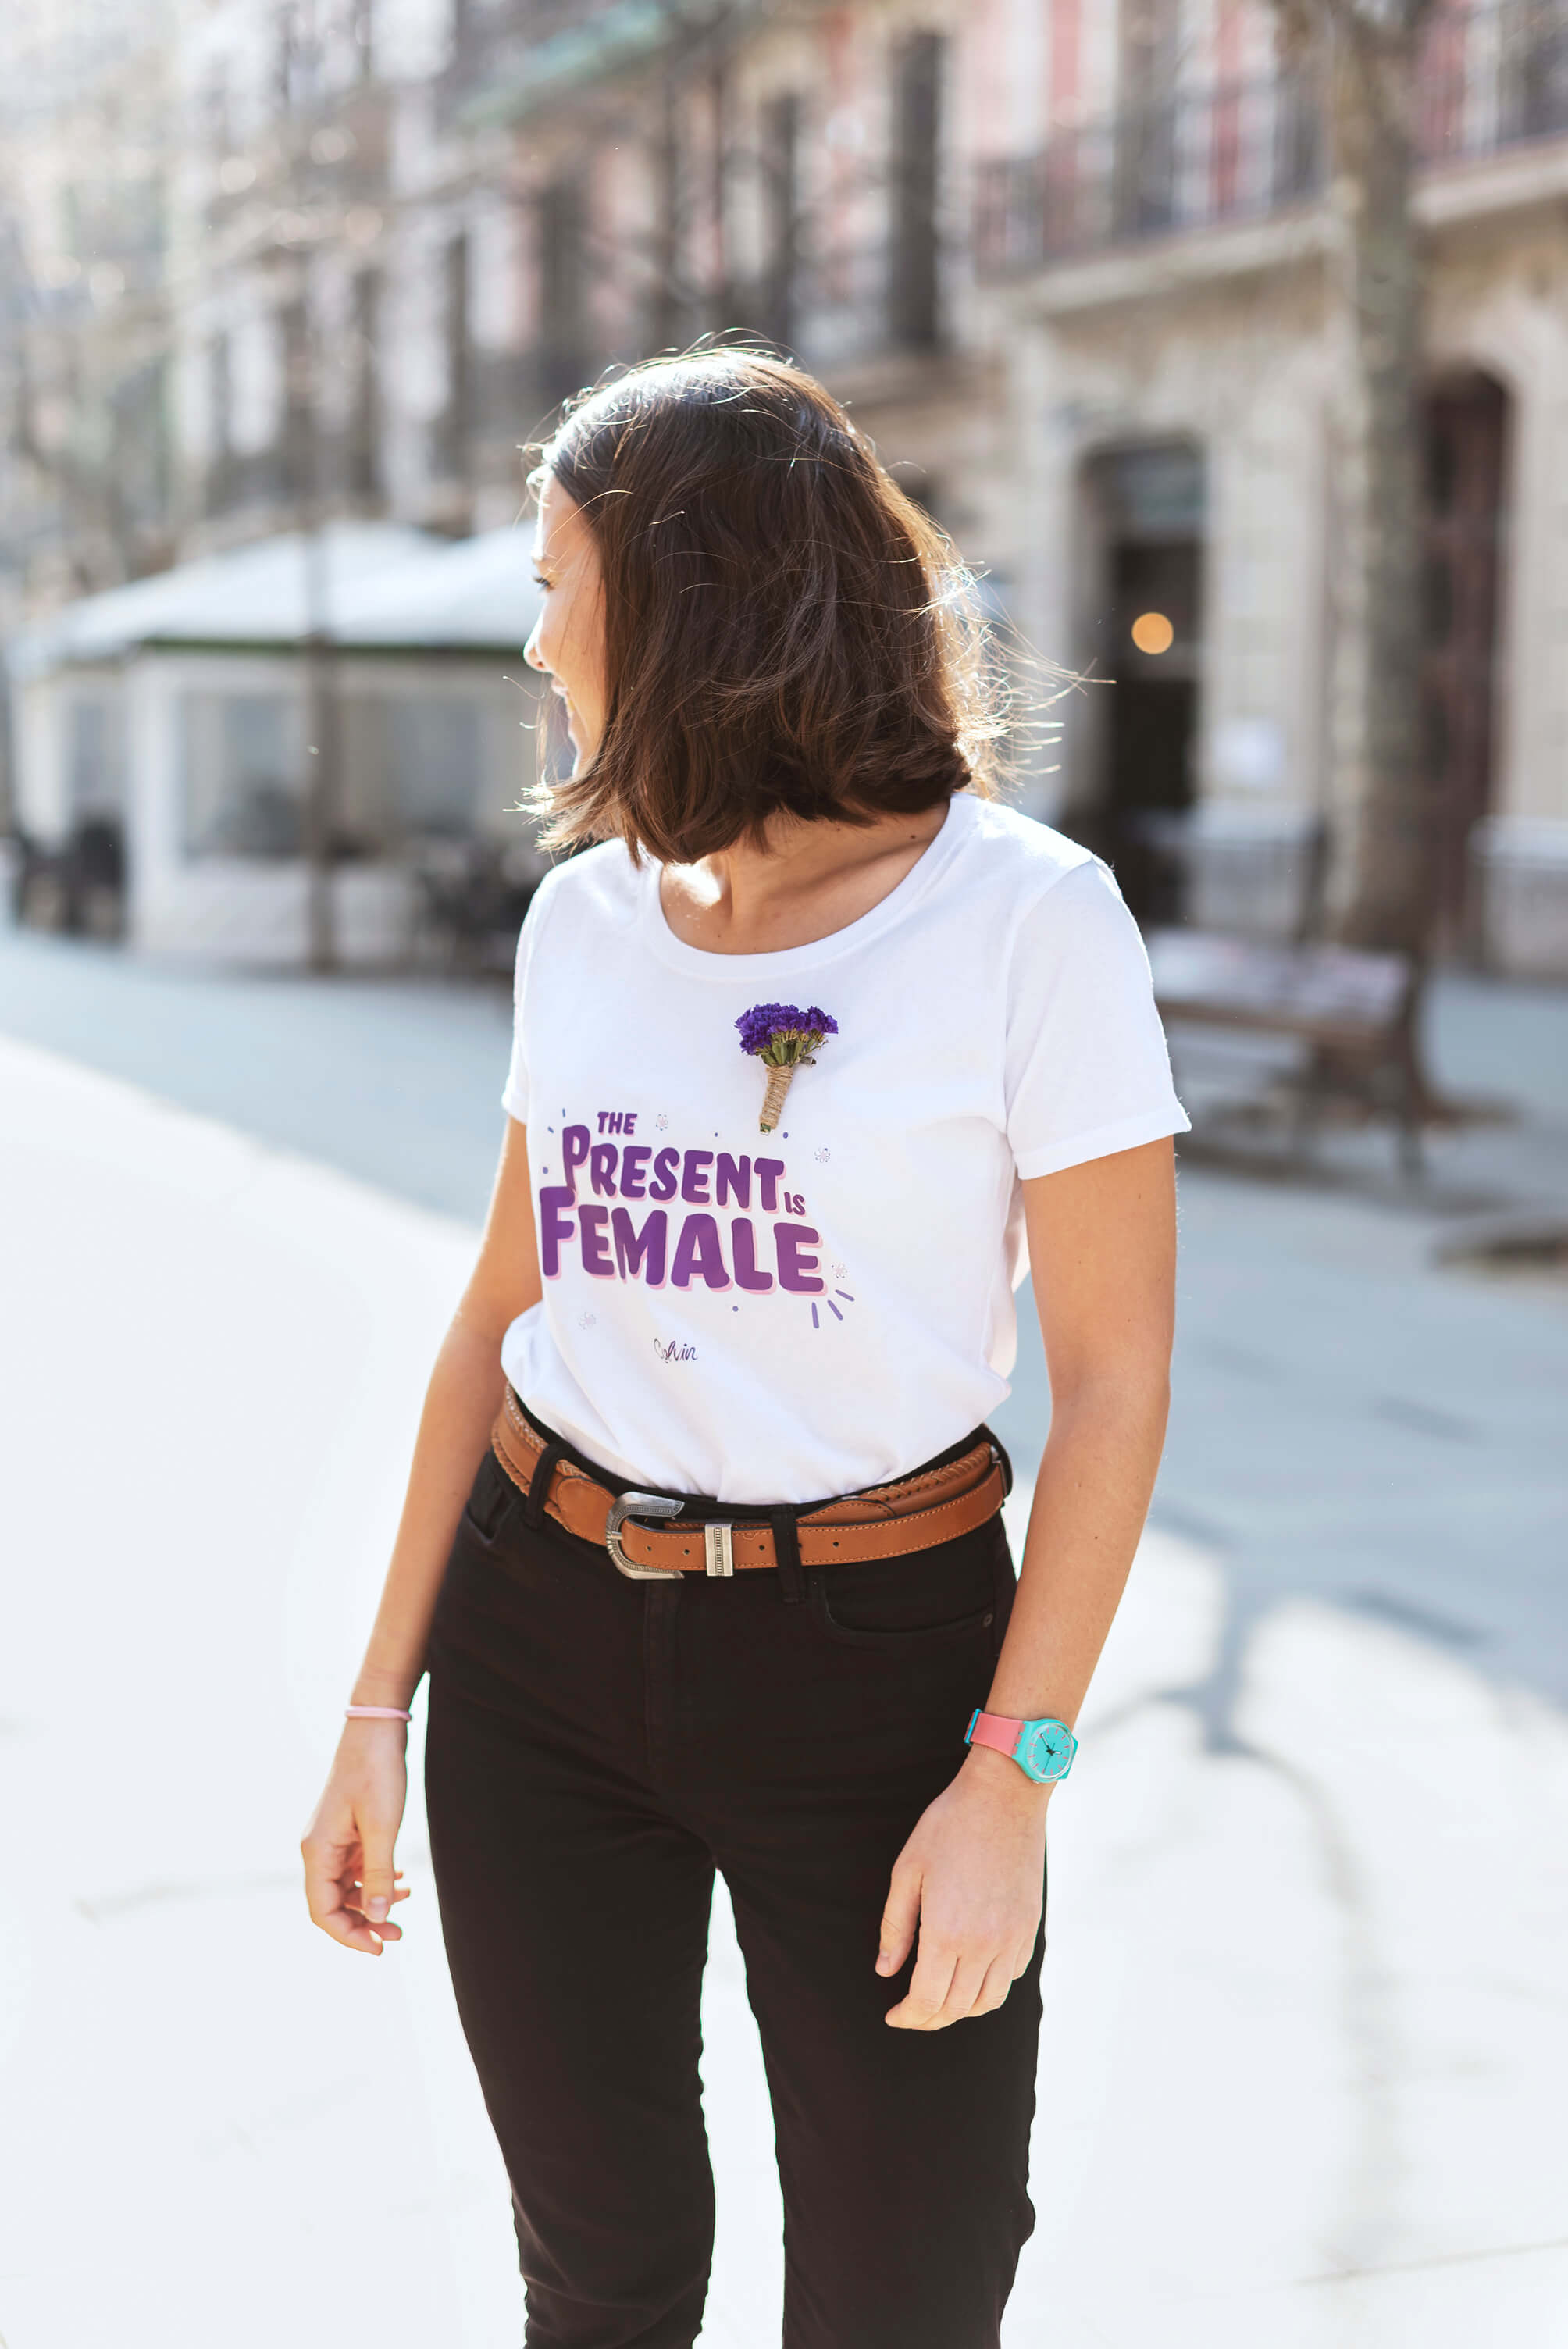 The Present is female camiseta para el dia de la mujer